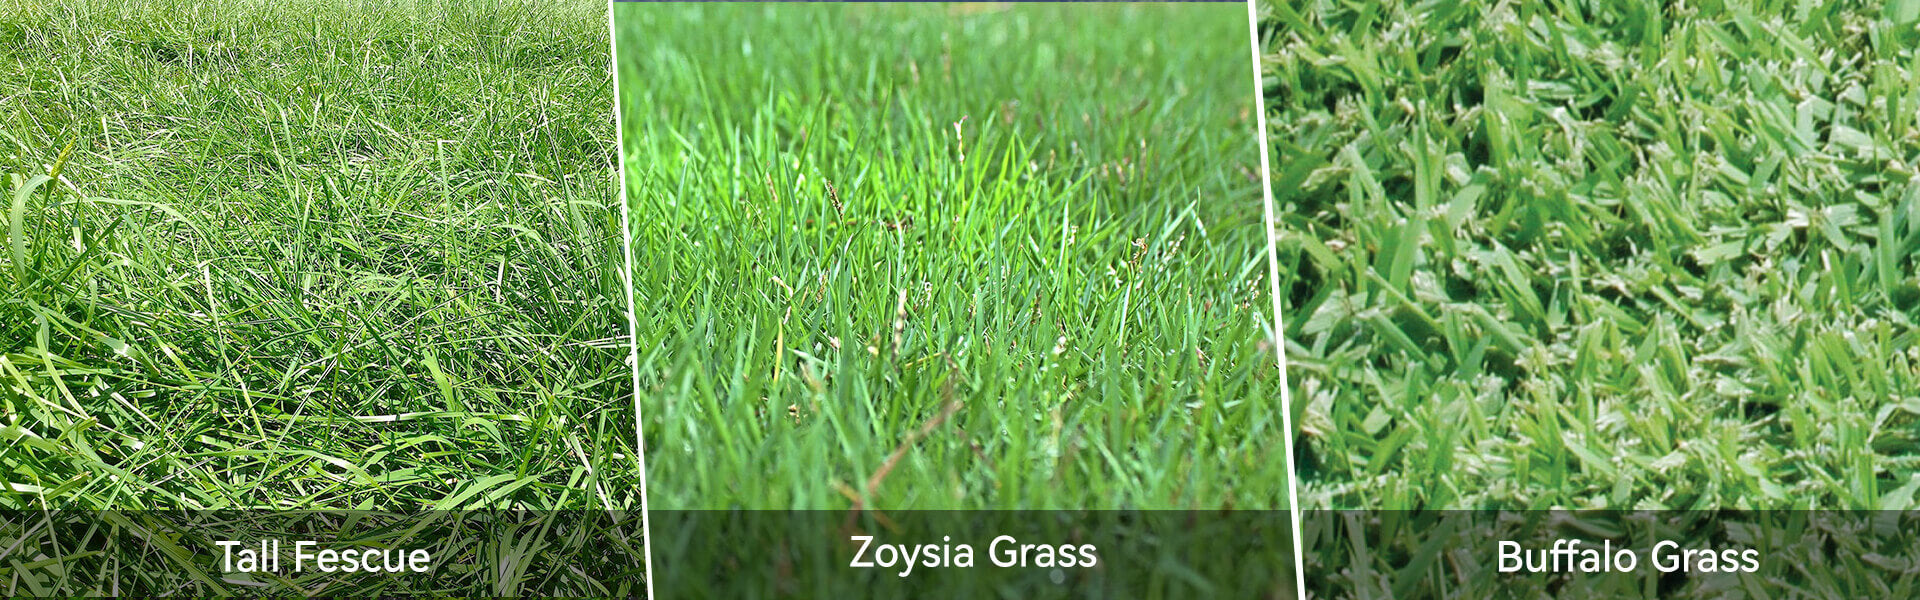 dethatch grass lawn